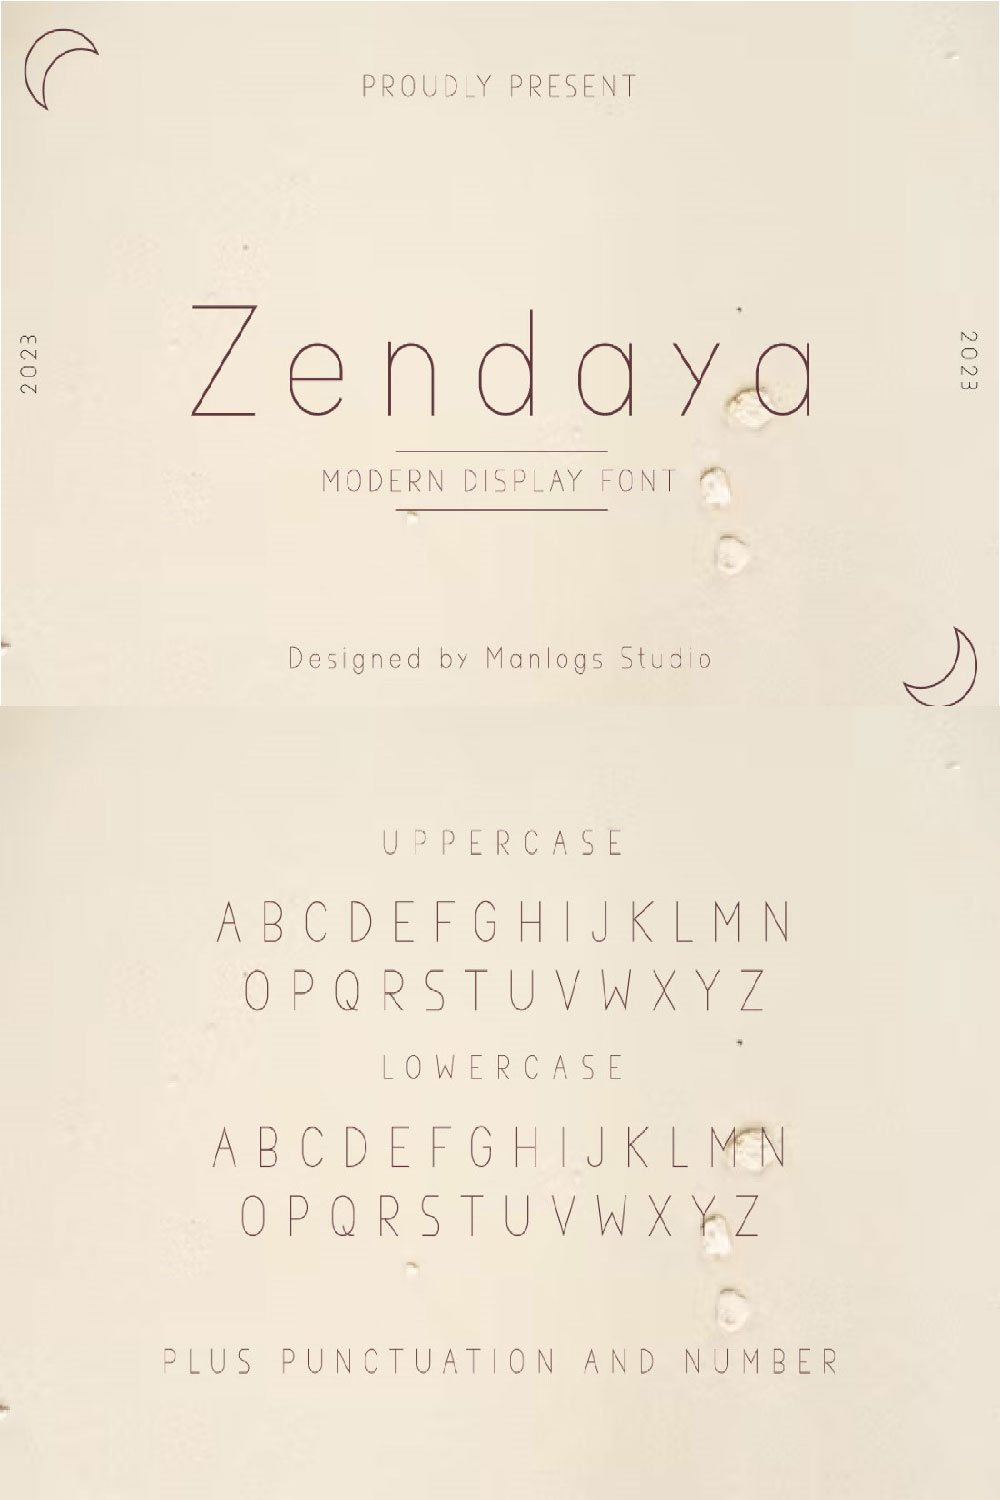 Zendaya pinterest preview image.